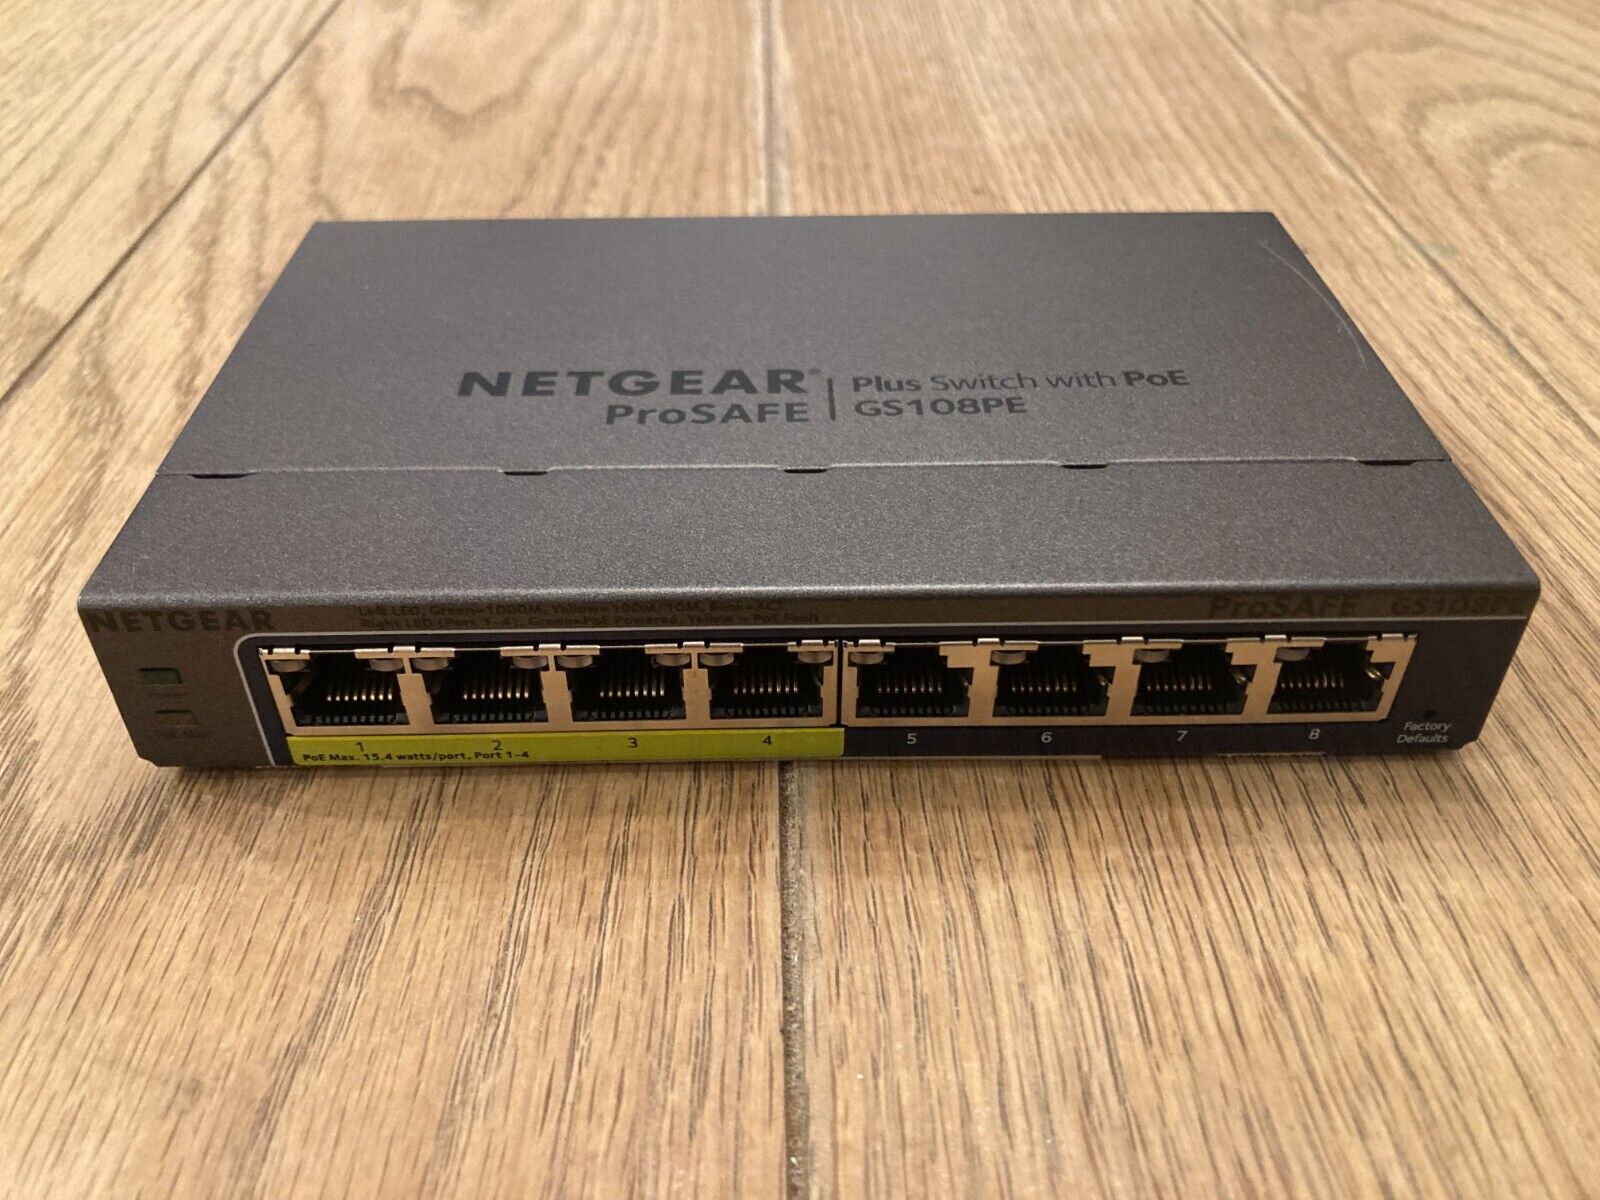 Netgear ProSAFE Plus 8-Port Gigabit Switch with 4-Port PoE GS108PEv3